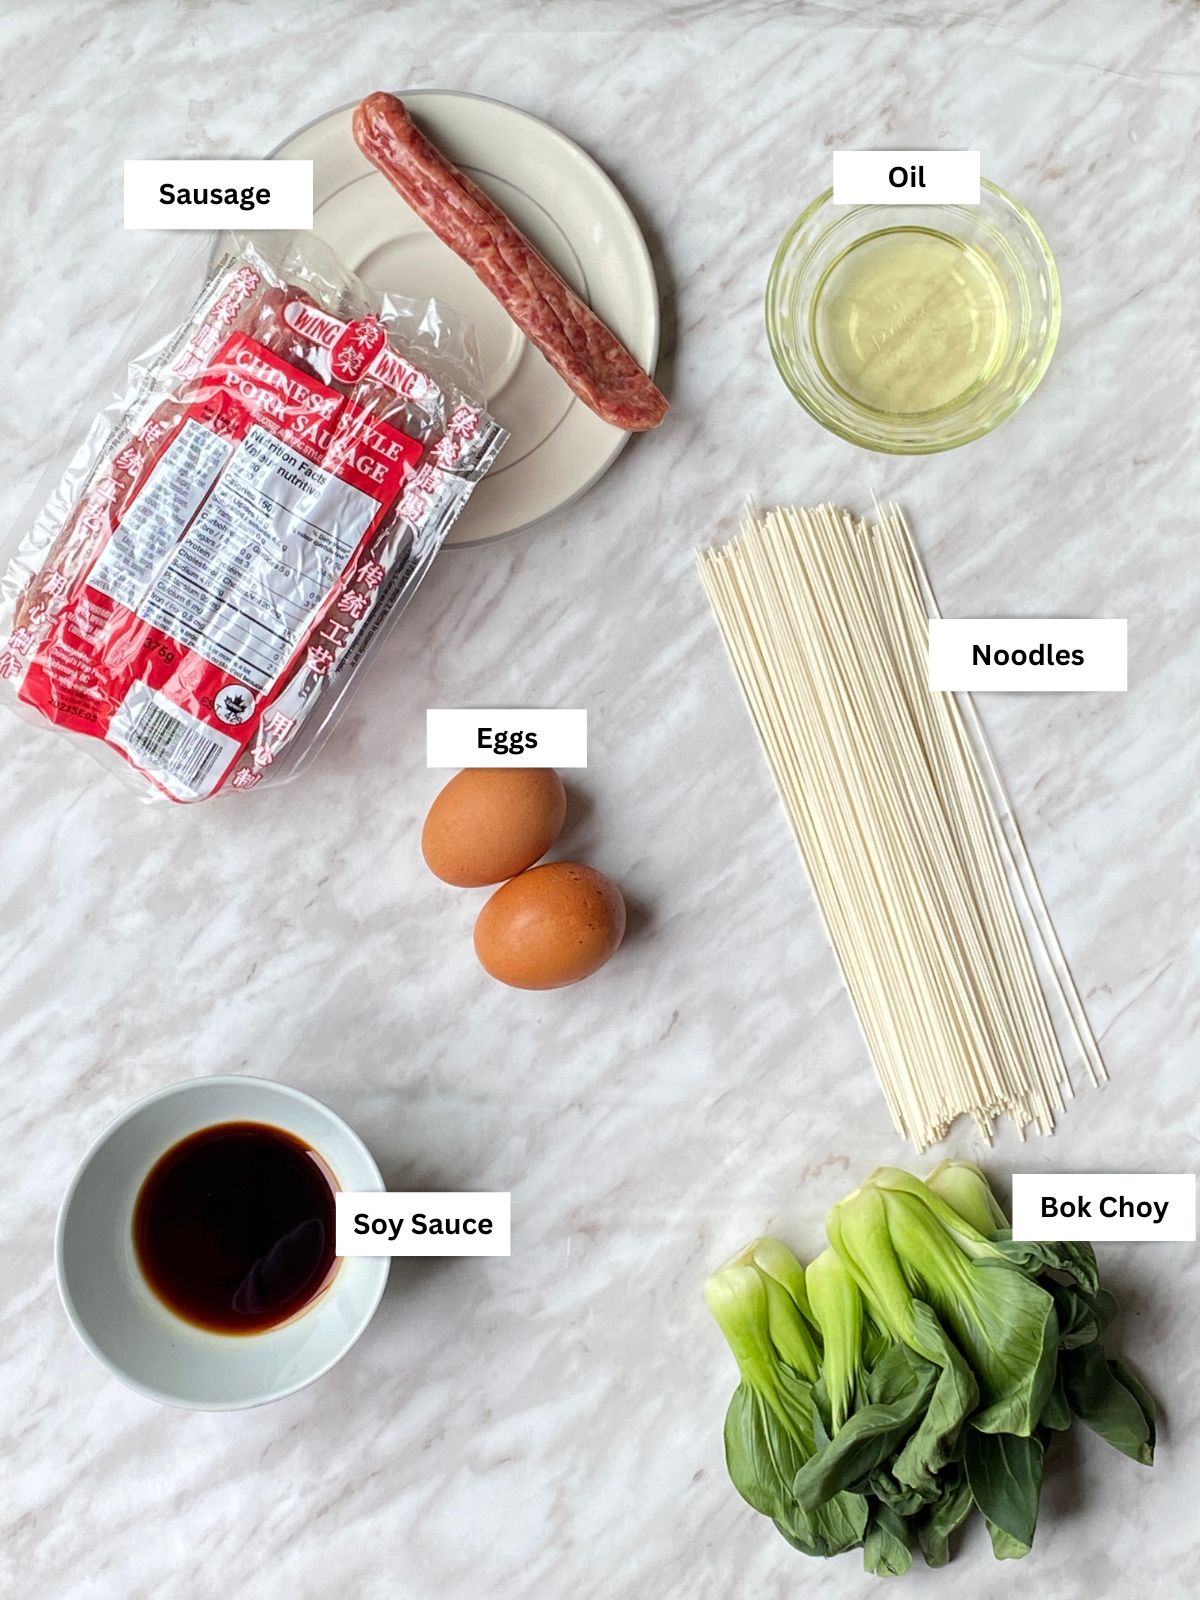 Labeled ingredient list for sausage stir fry noodles - check recipe card for details!